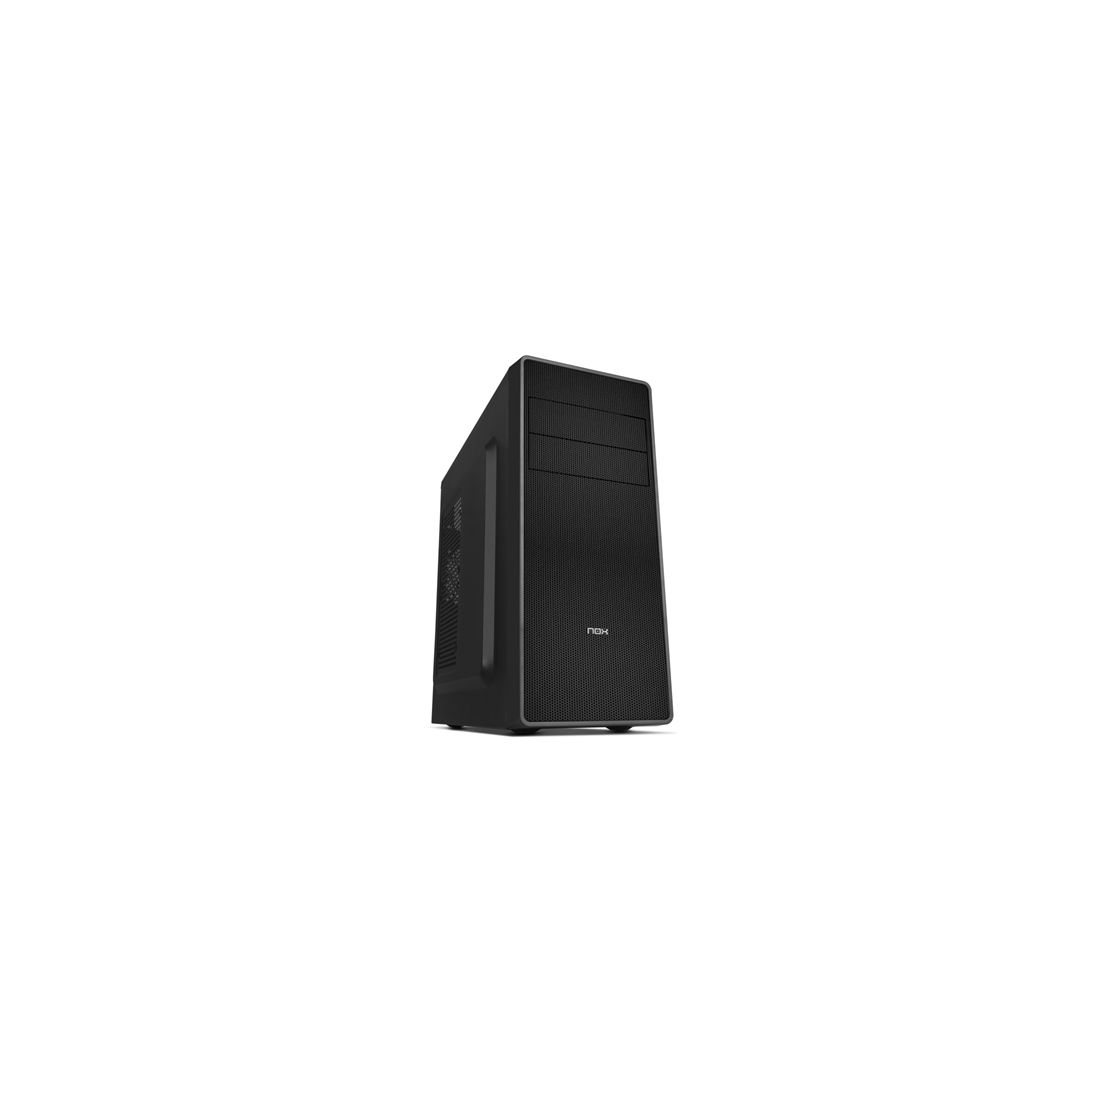 Nox Caja Semitorre ATX Coolbay RX Negra USB 30